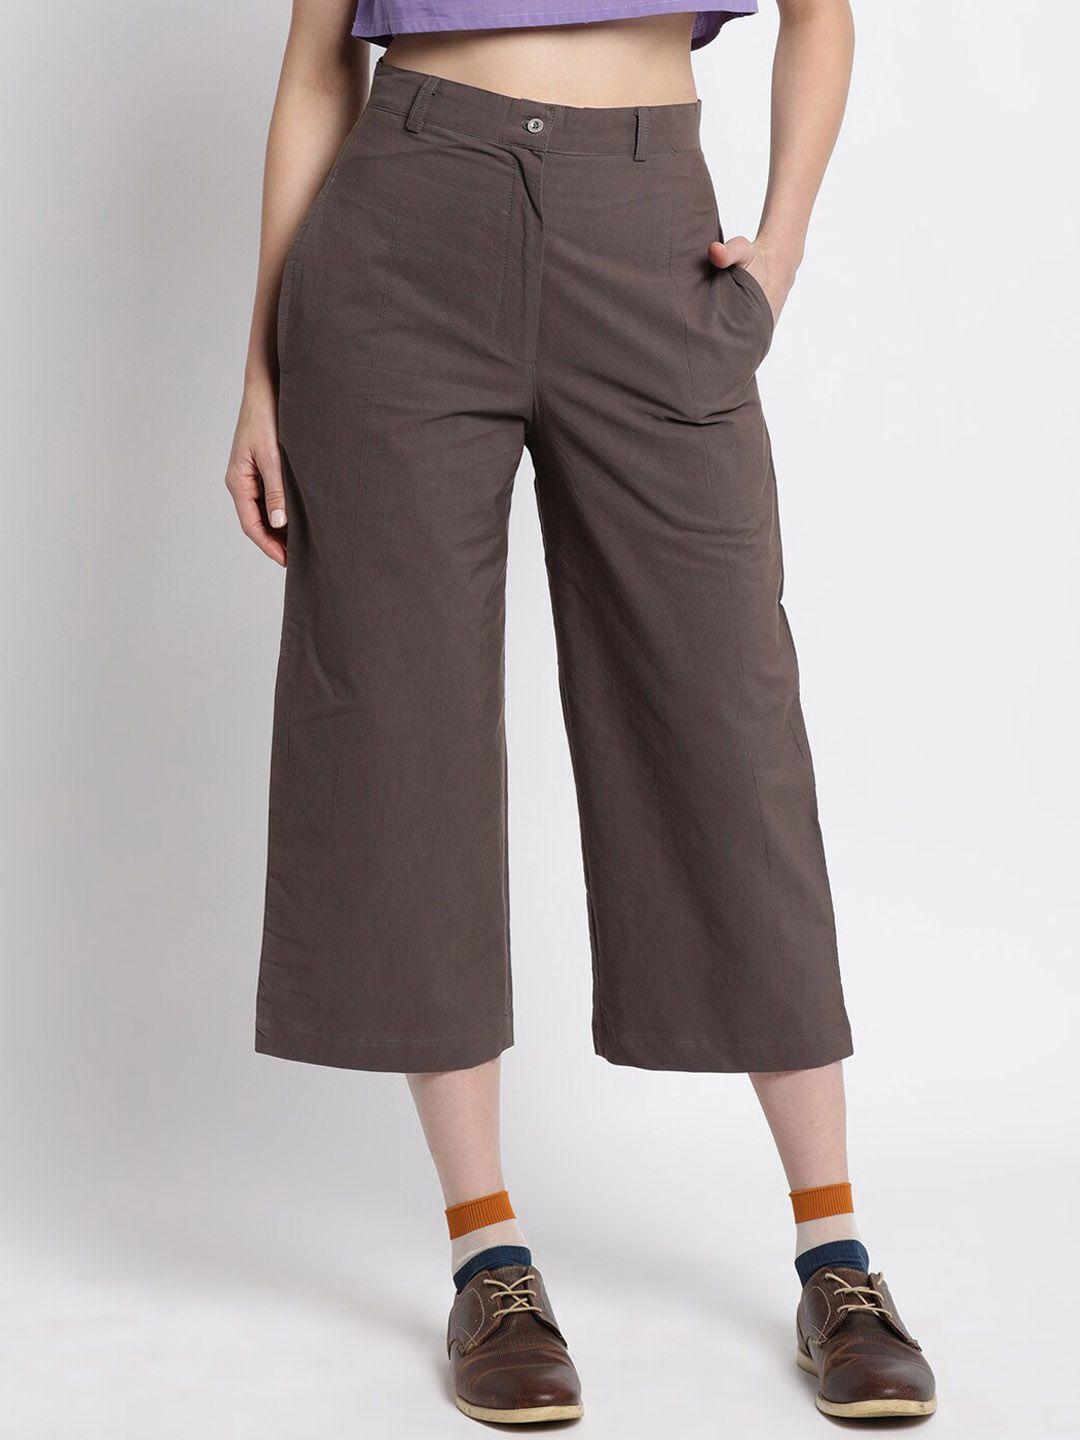 grass by gitika goyal women smart slim fit high-rise cotton culottes trousers